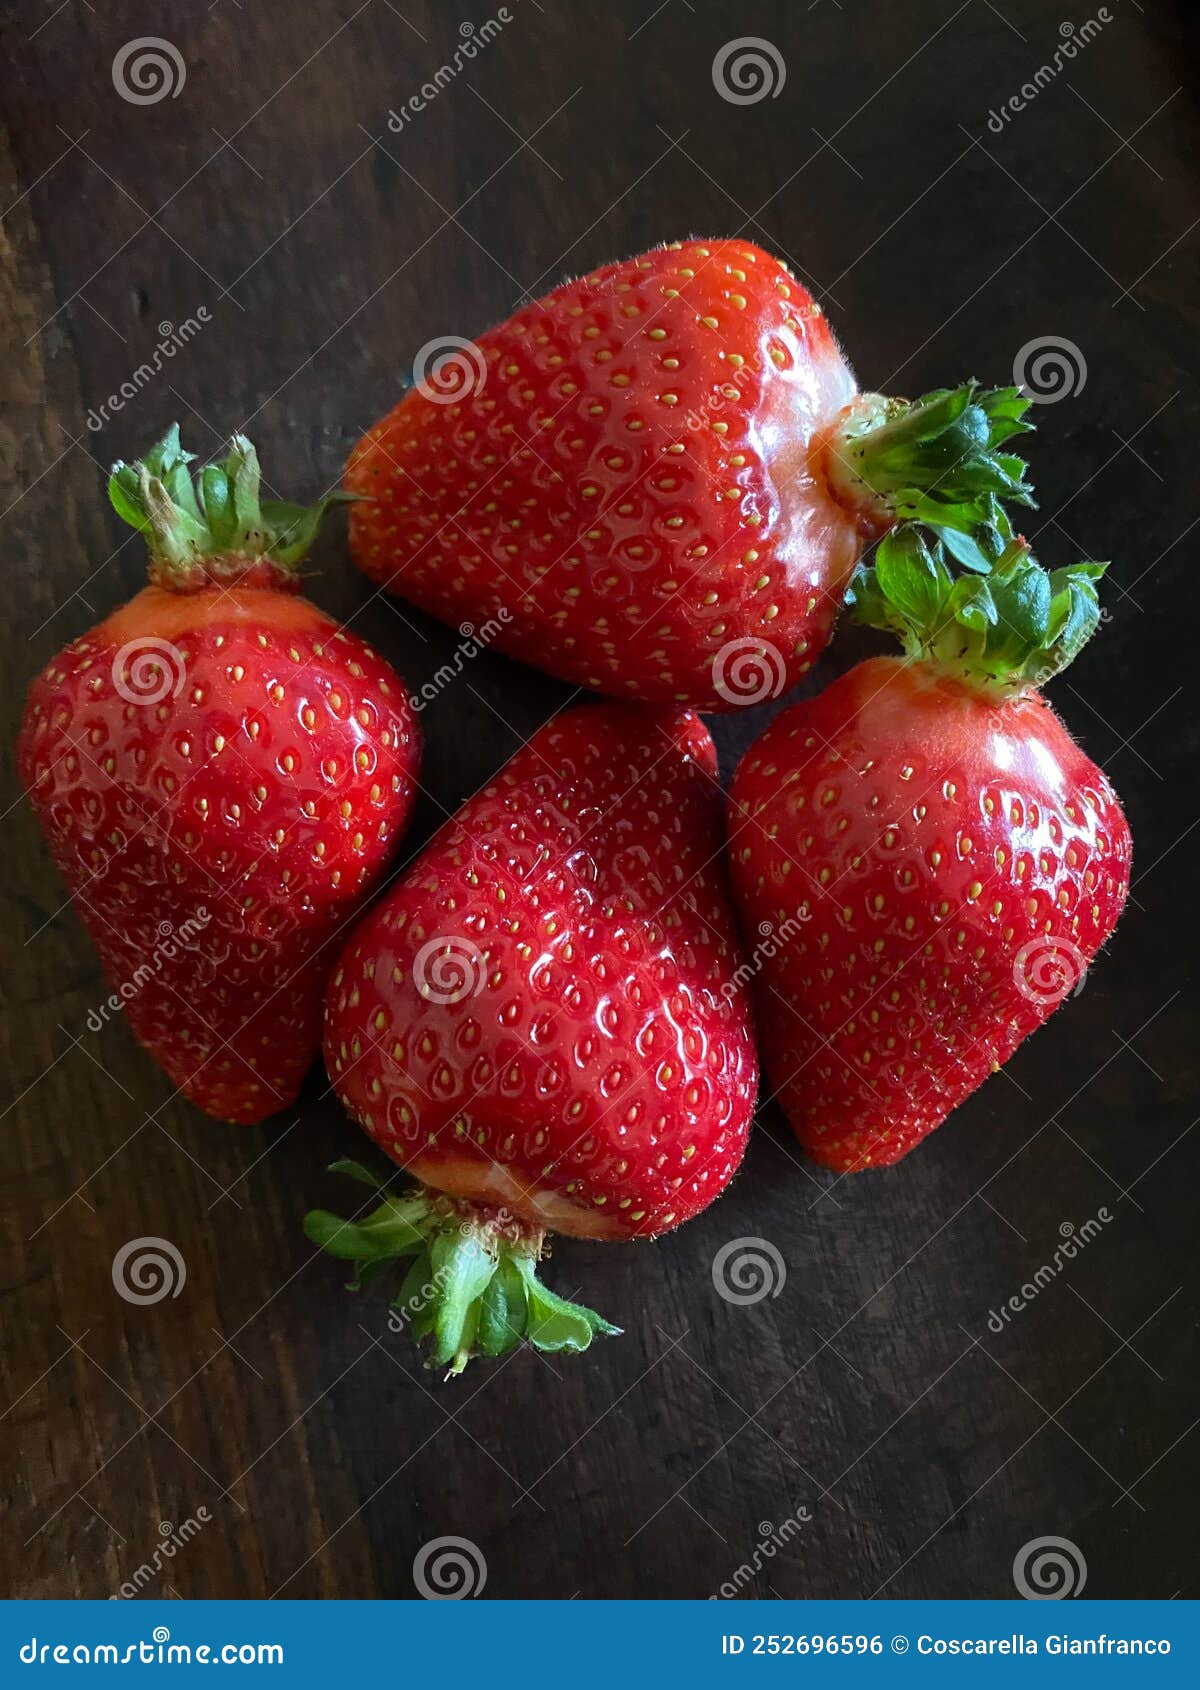 tasty, beautiful, sweet strawberries